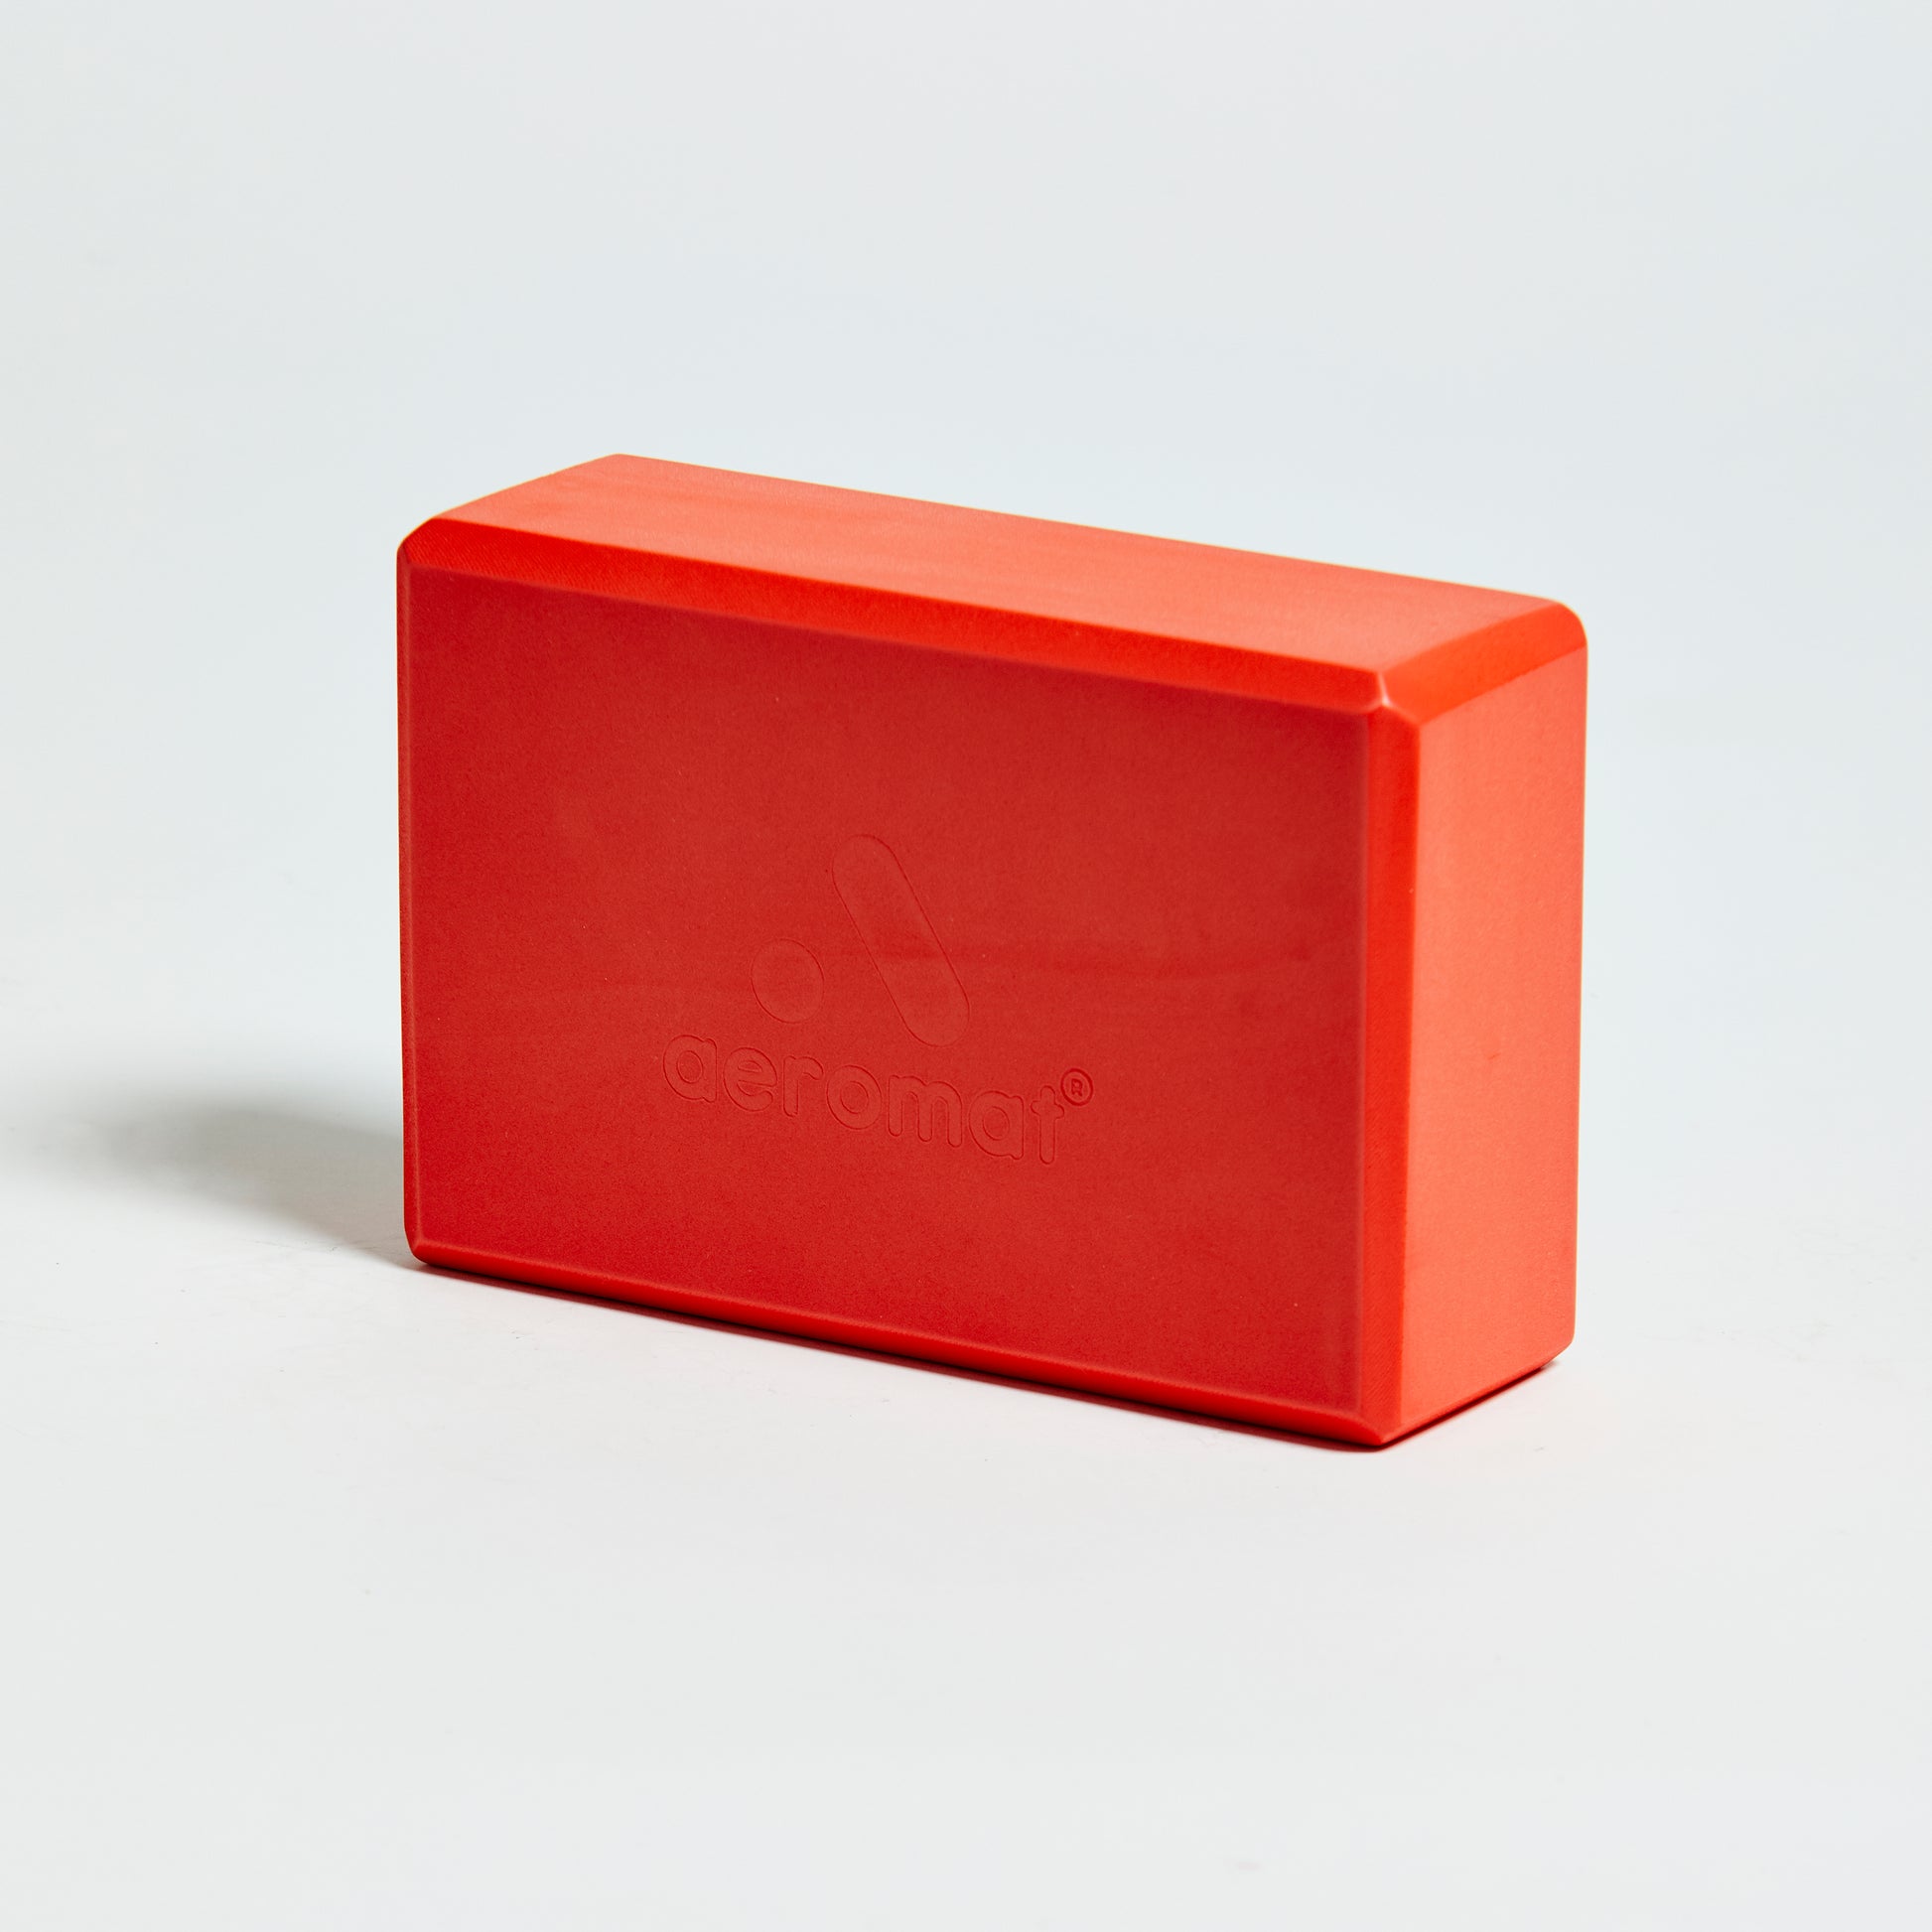 Maxtree Ethylene Vinyl Acetate (Eva) Foam Yoga Block Brick Set Of